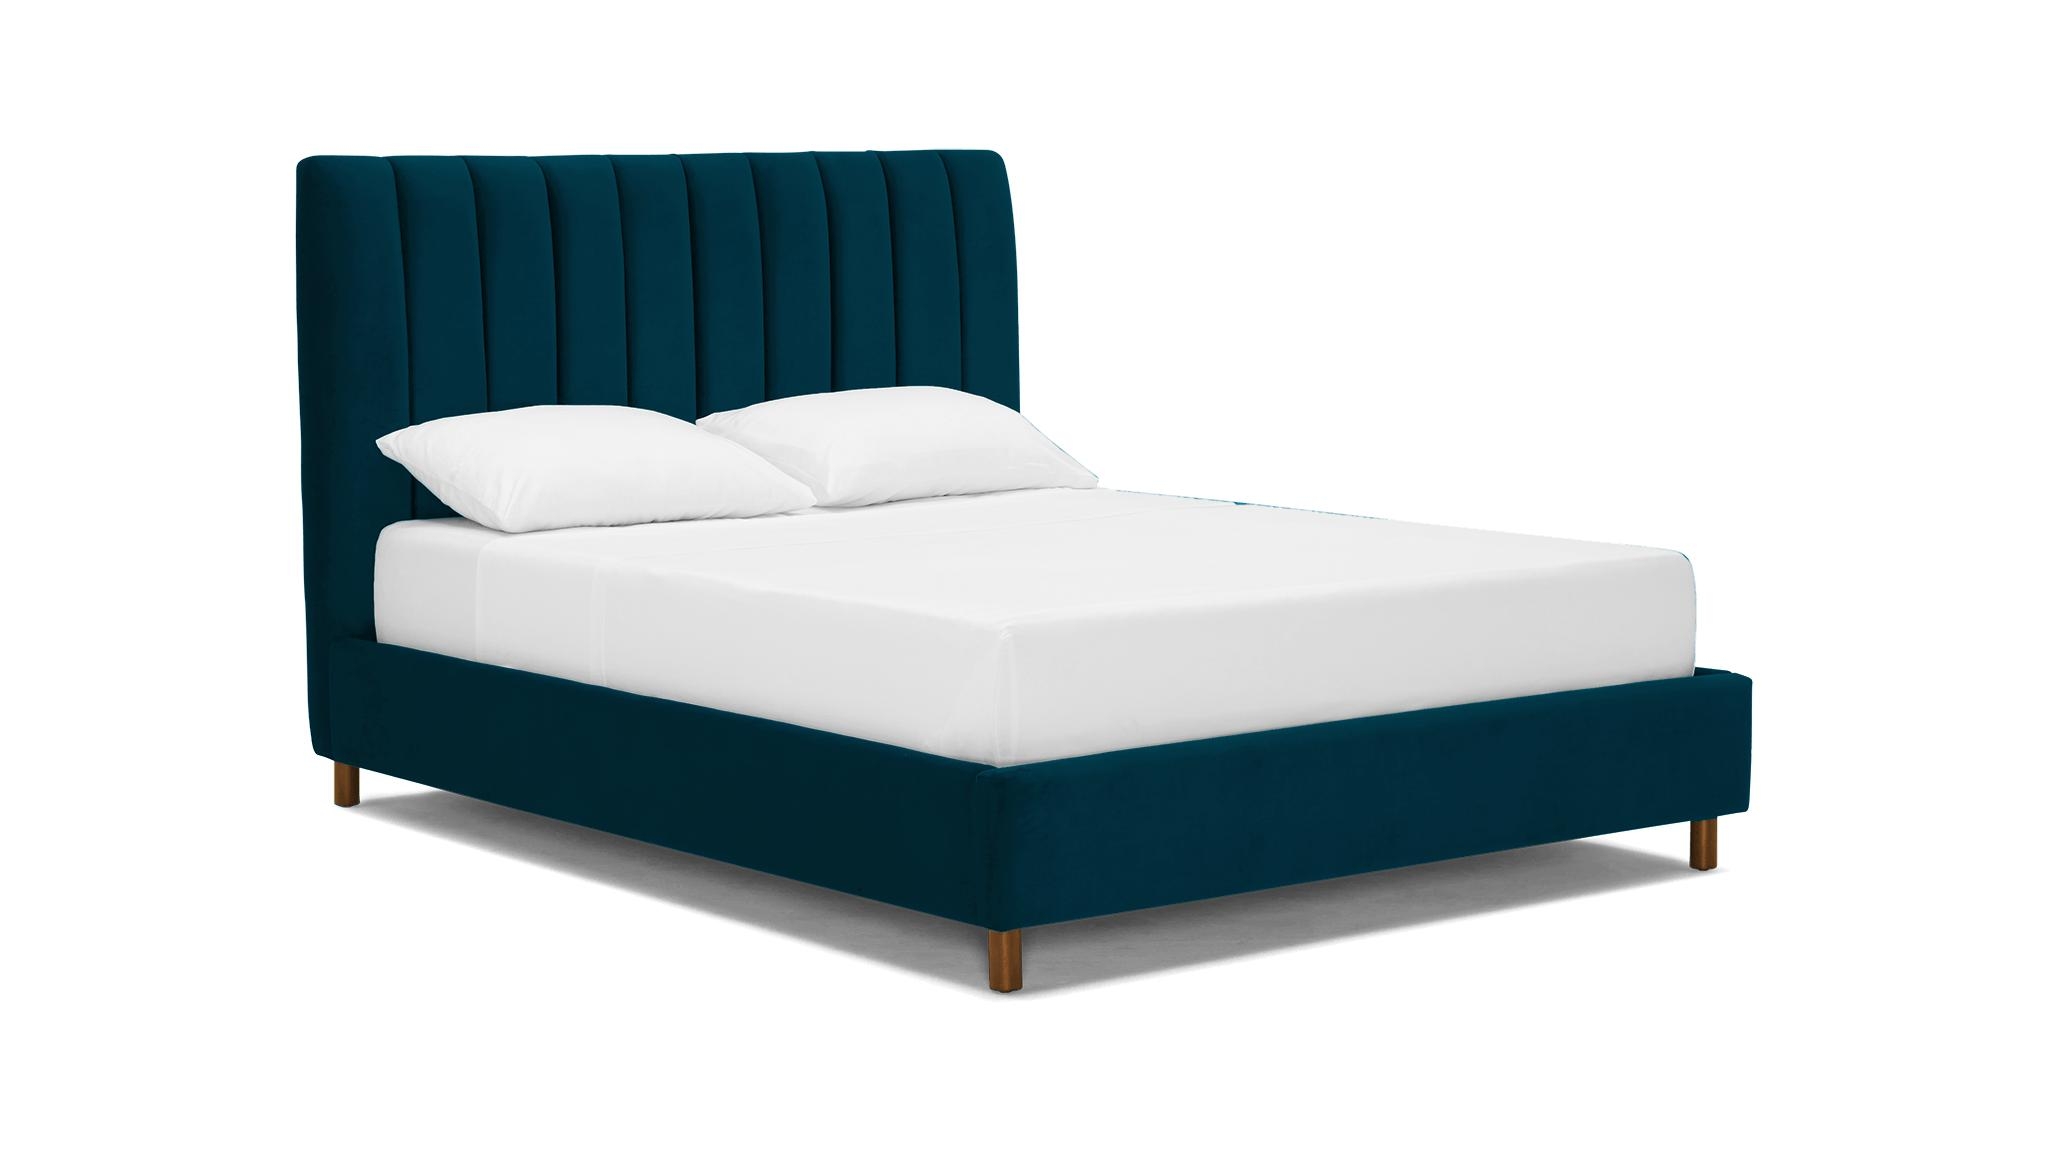 Blue Lotta Mid Century Modern Bed - Key Largo Zenith Teal - Mocha - Eastern King - Image 1